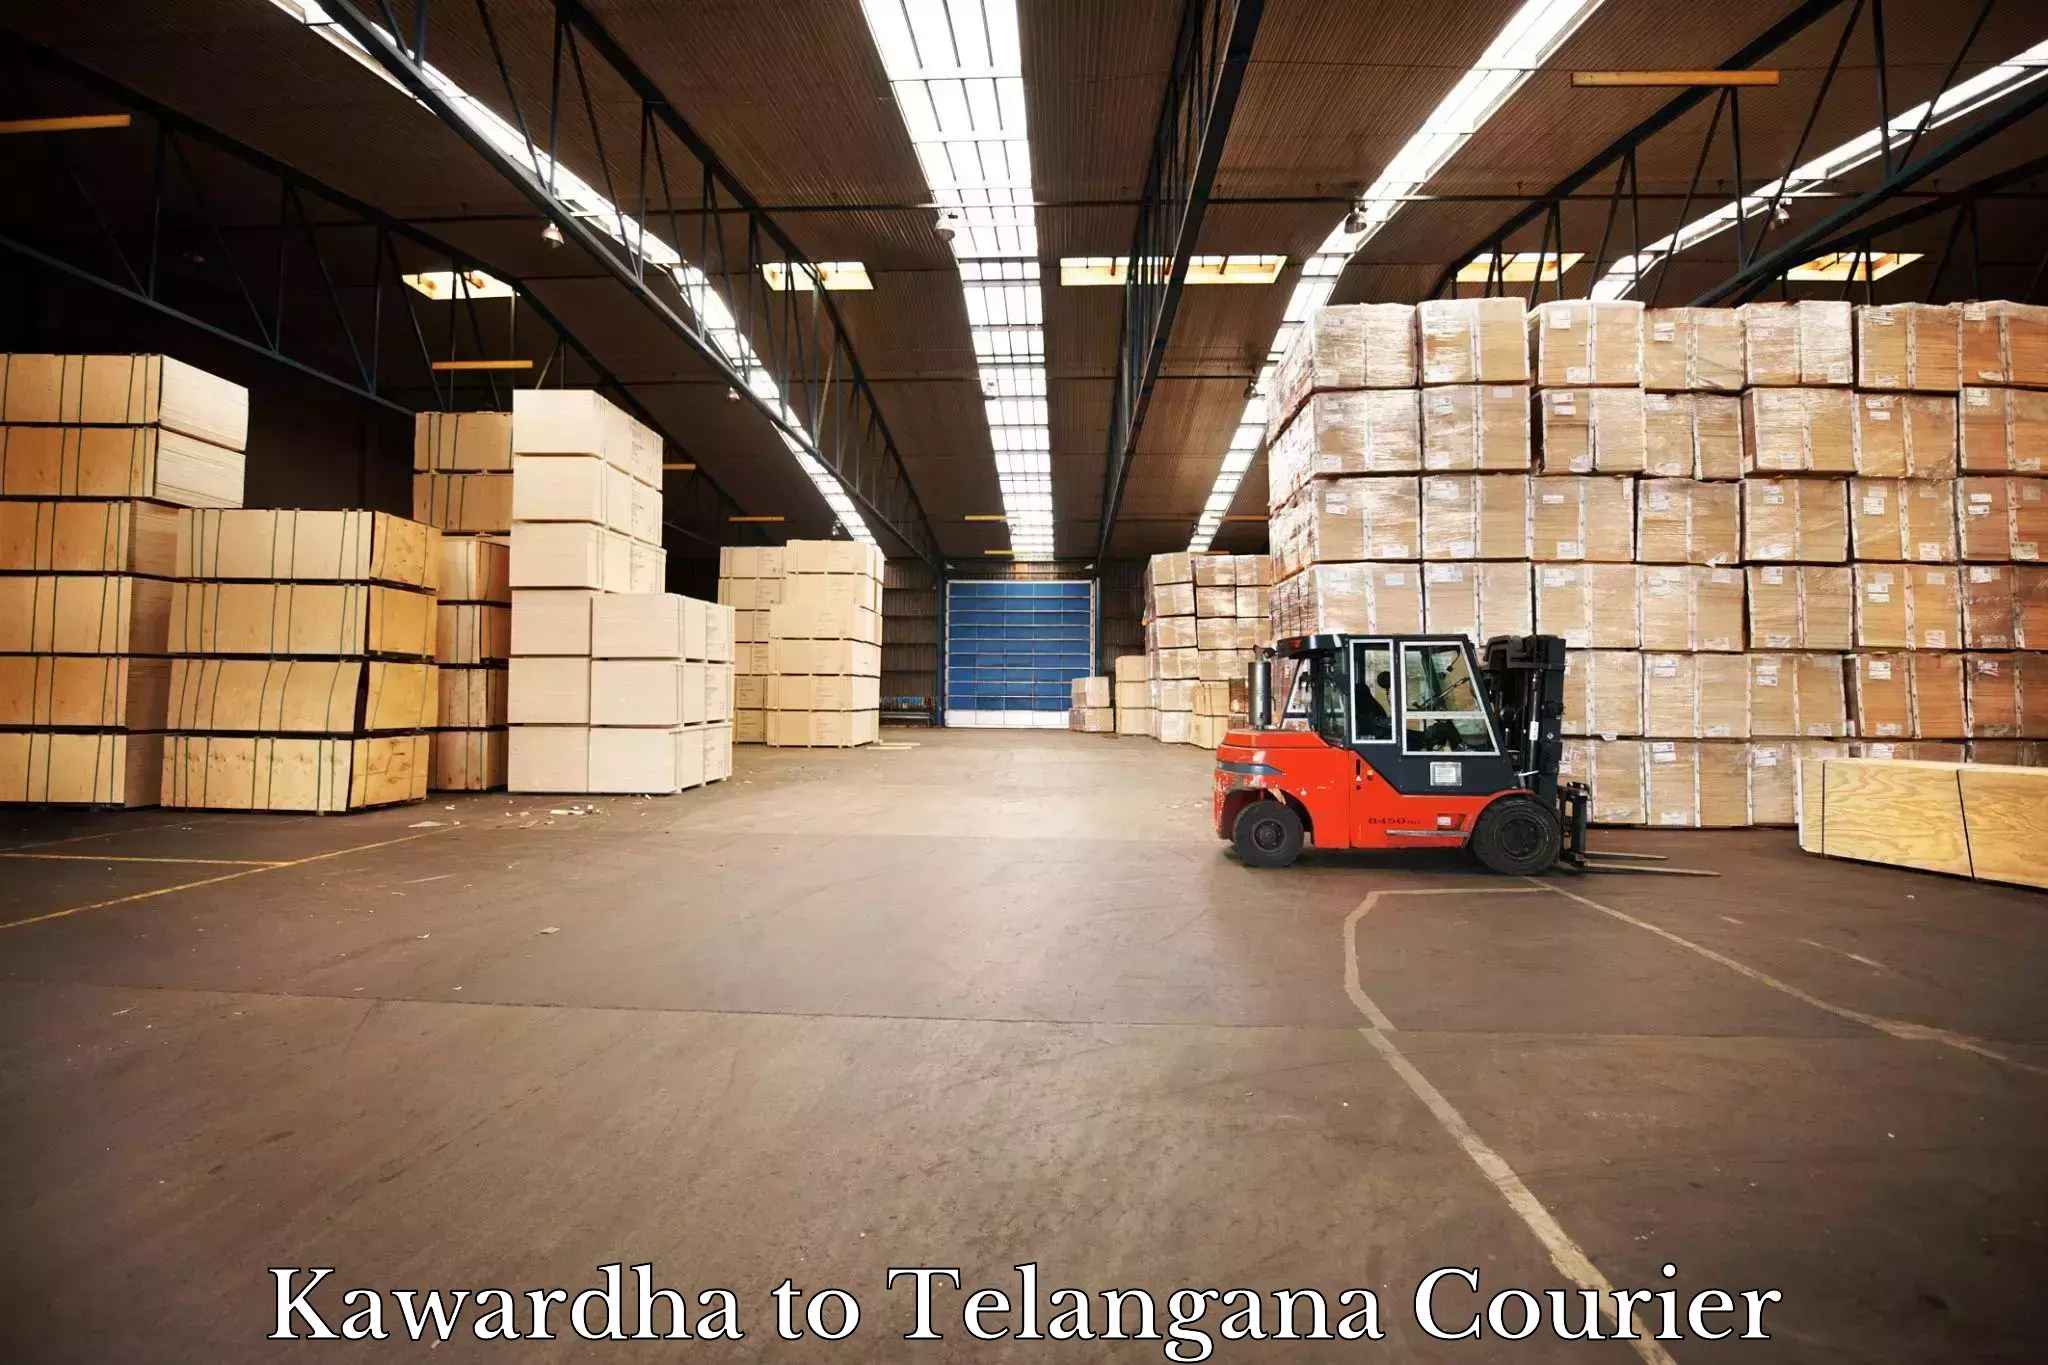 Logistics service provider Kawardha to Telangana